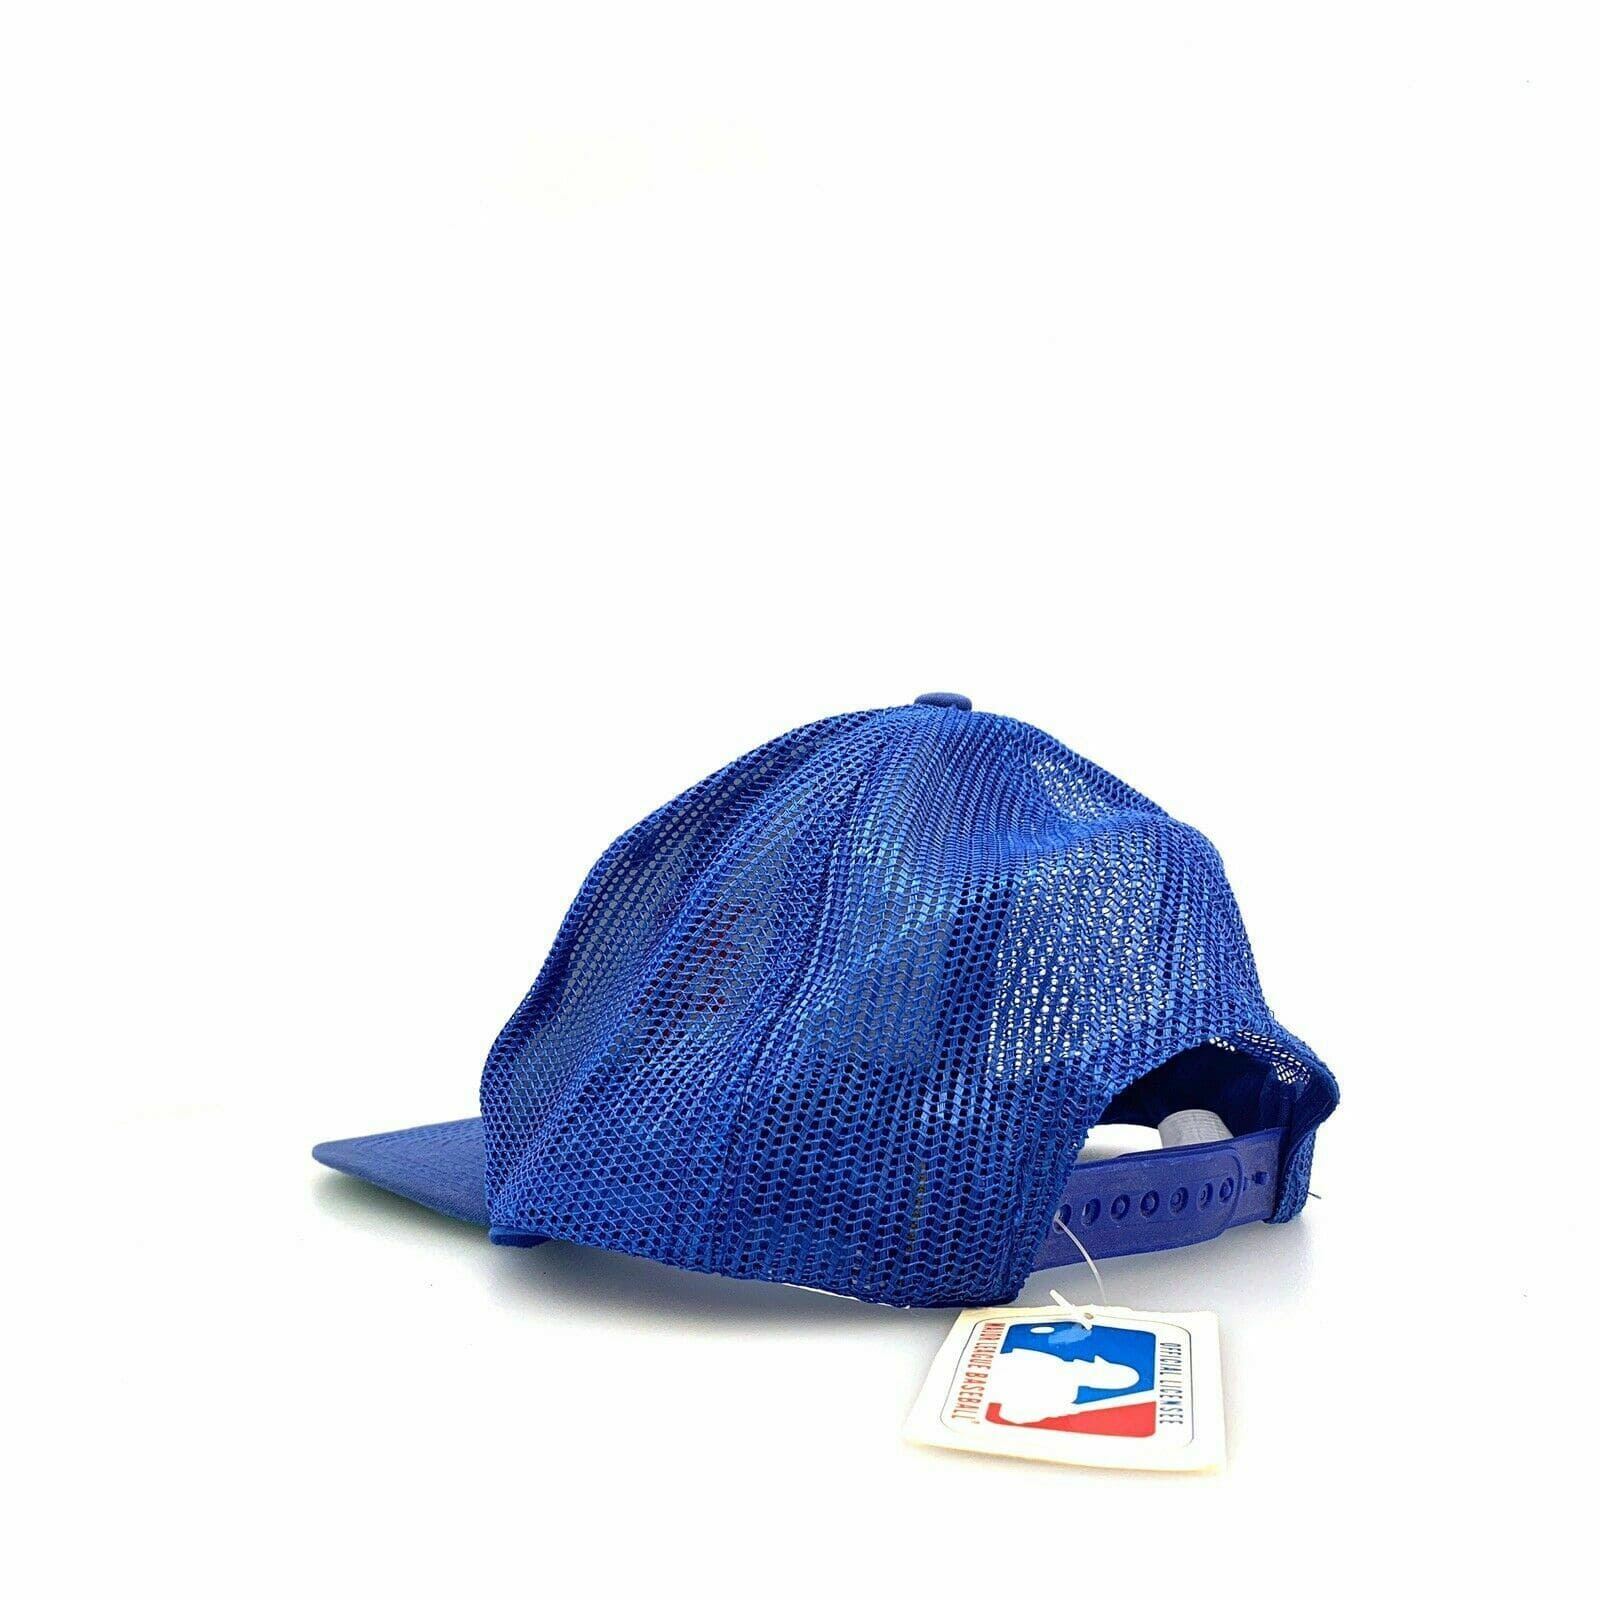 Vintage Drew Pearson New York Mets Snapback Trucker Hat, Blue - OSFA - parsimonyshoppes